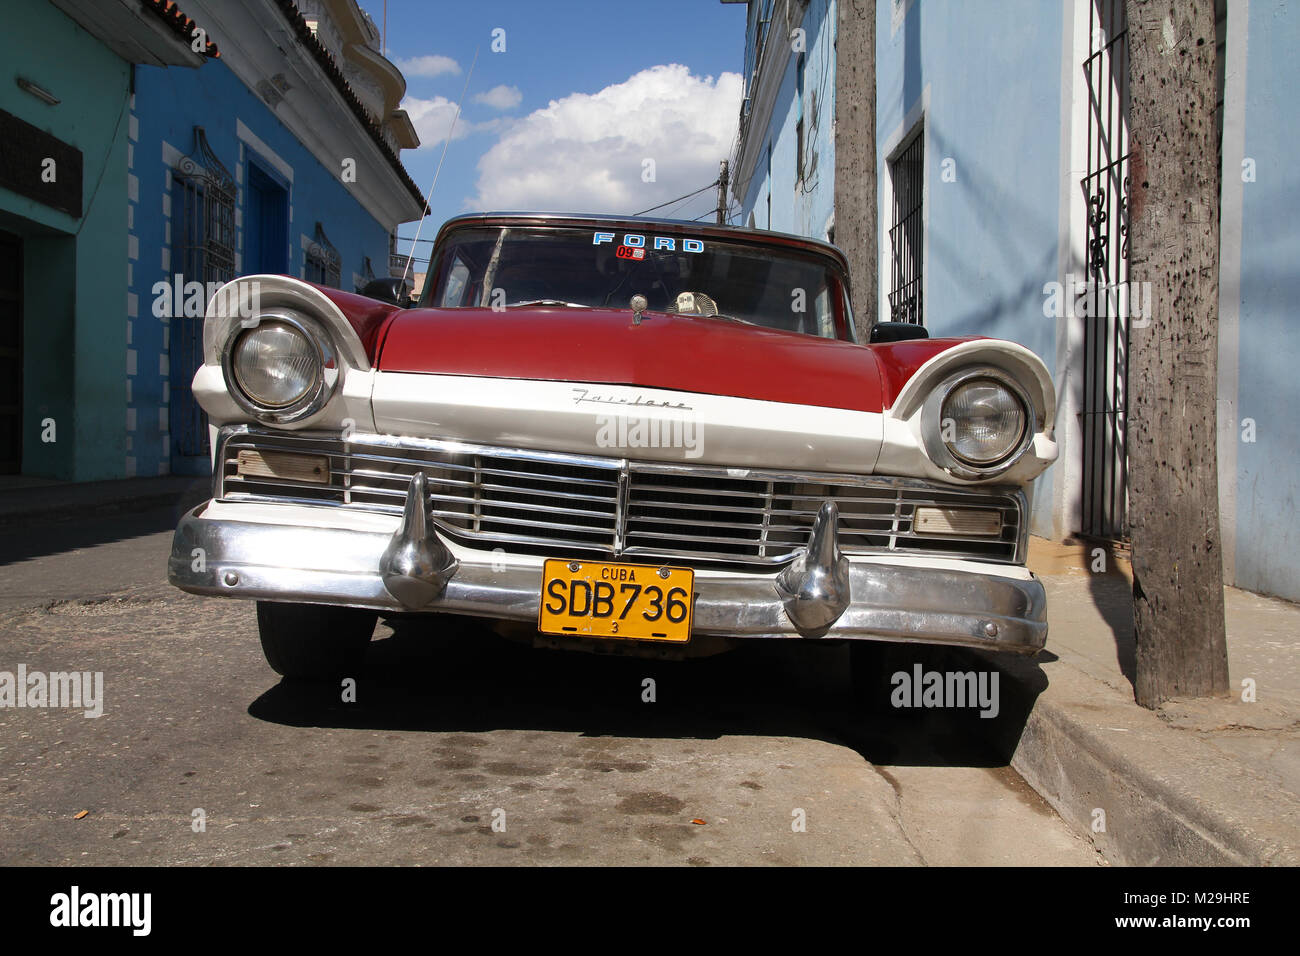 SANCTI SPIRITUS, CUBA - FEBRUARY 6: Classic American car in the street on February 6, 2011 in Sancti Spiritus, Cuba. The multitude of oldtimer cars in Stock Photo